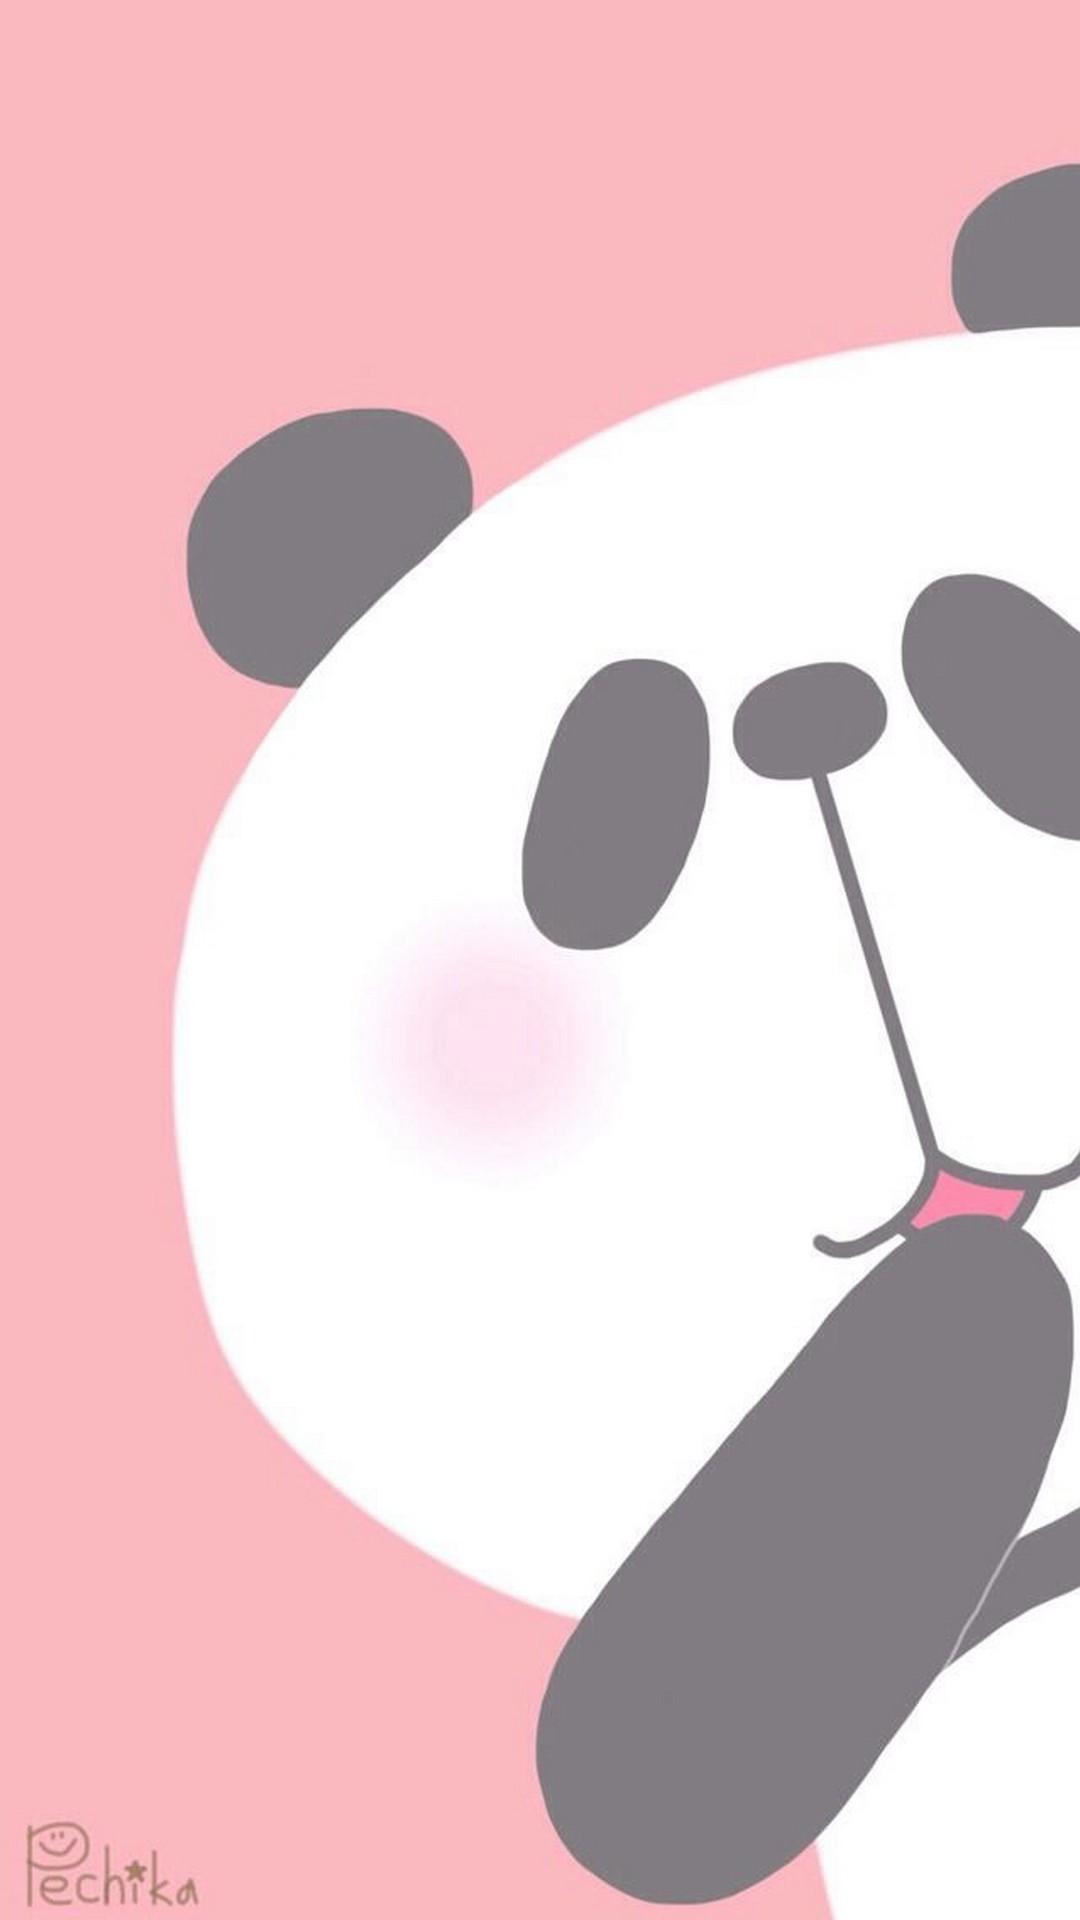 Panda iPhone Wallpaper